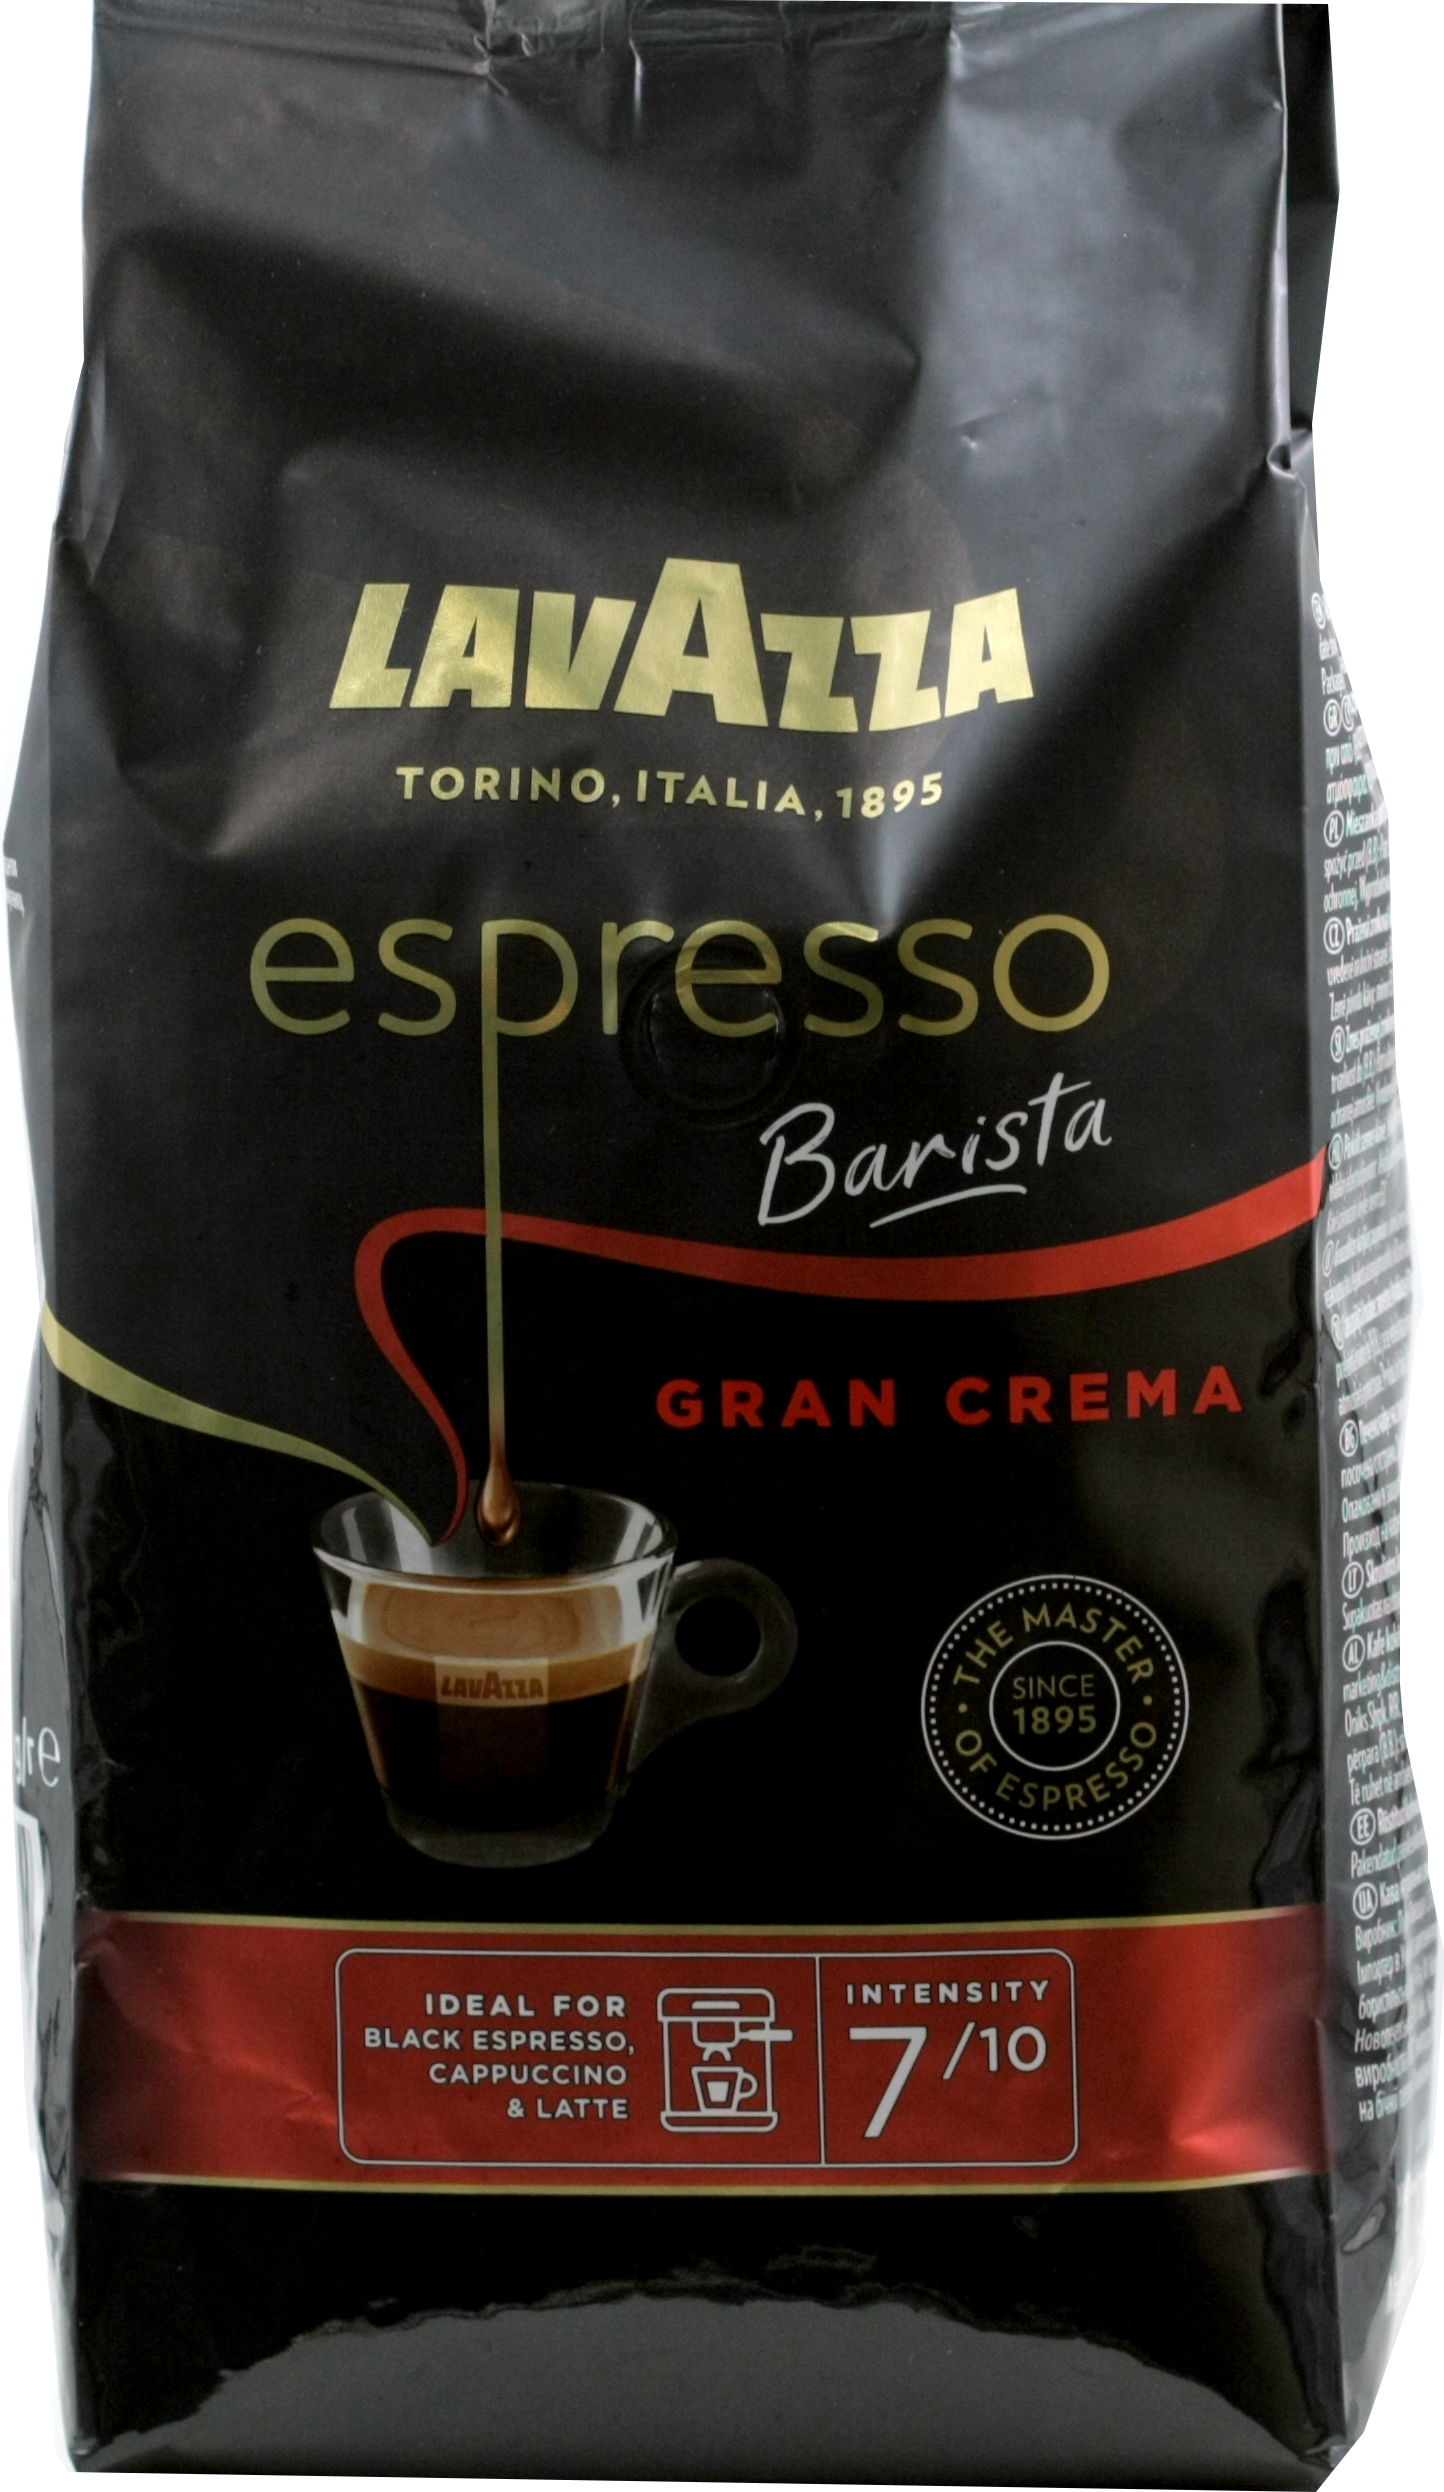 Gran crema. Lavazza Gran crema (Гран крема) - кофе в чалдах. Кофе Carraro crema Espresso. Кофе в мягкой упаковке. Carraro crema Espresso 1 кг.